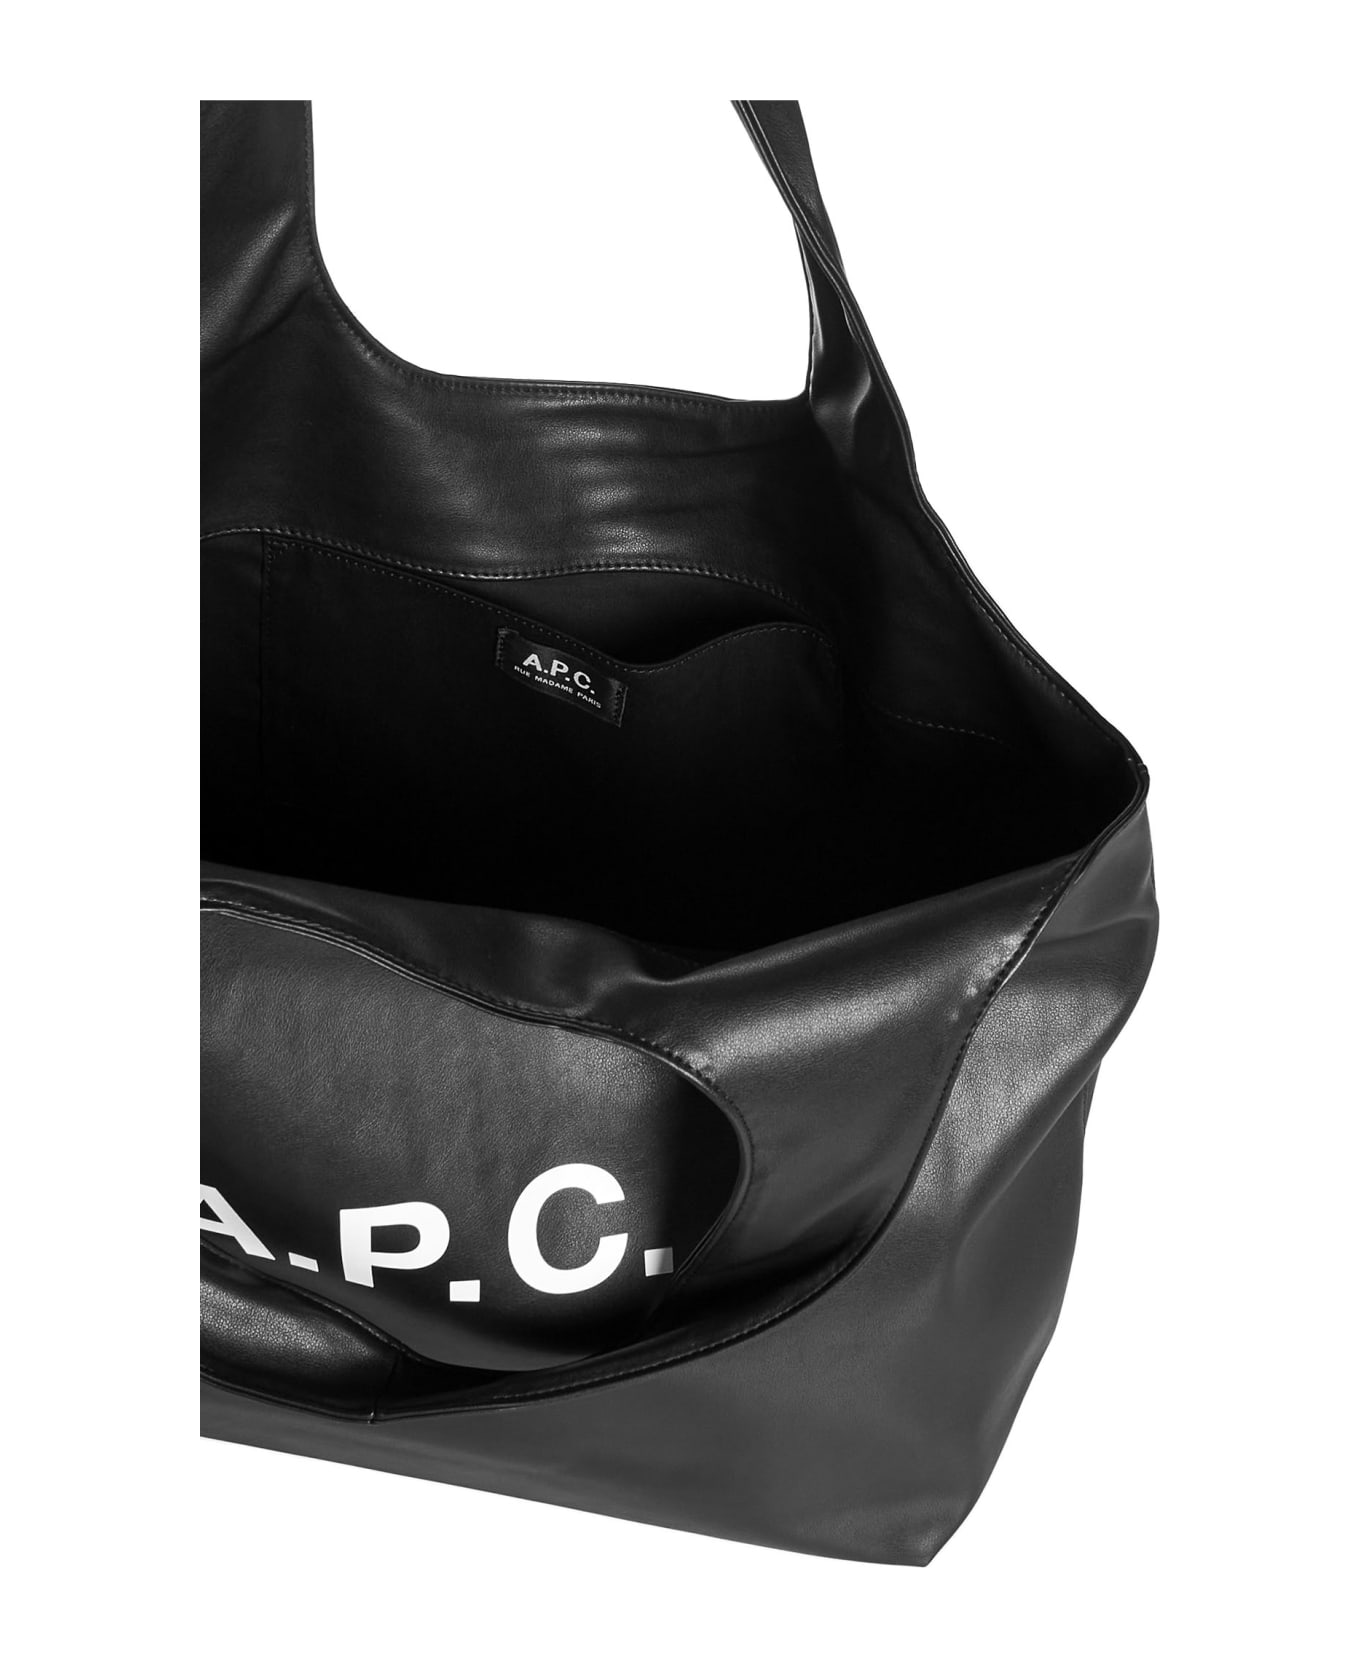 A.P.C. Ninon Tote Bag - BLACK トートバッグ